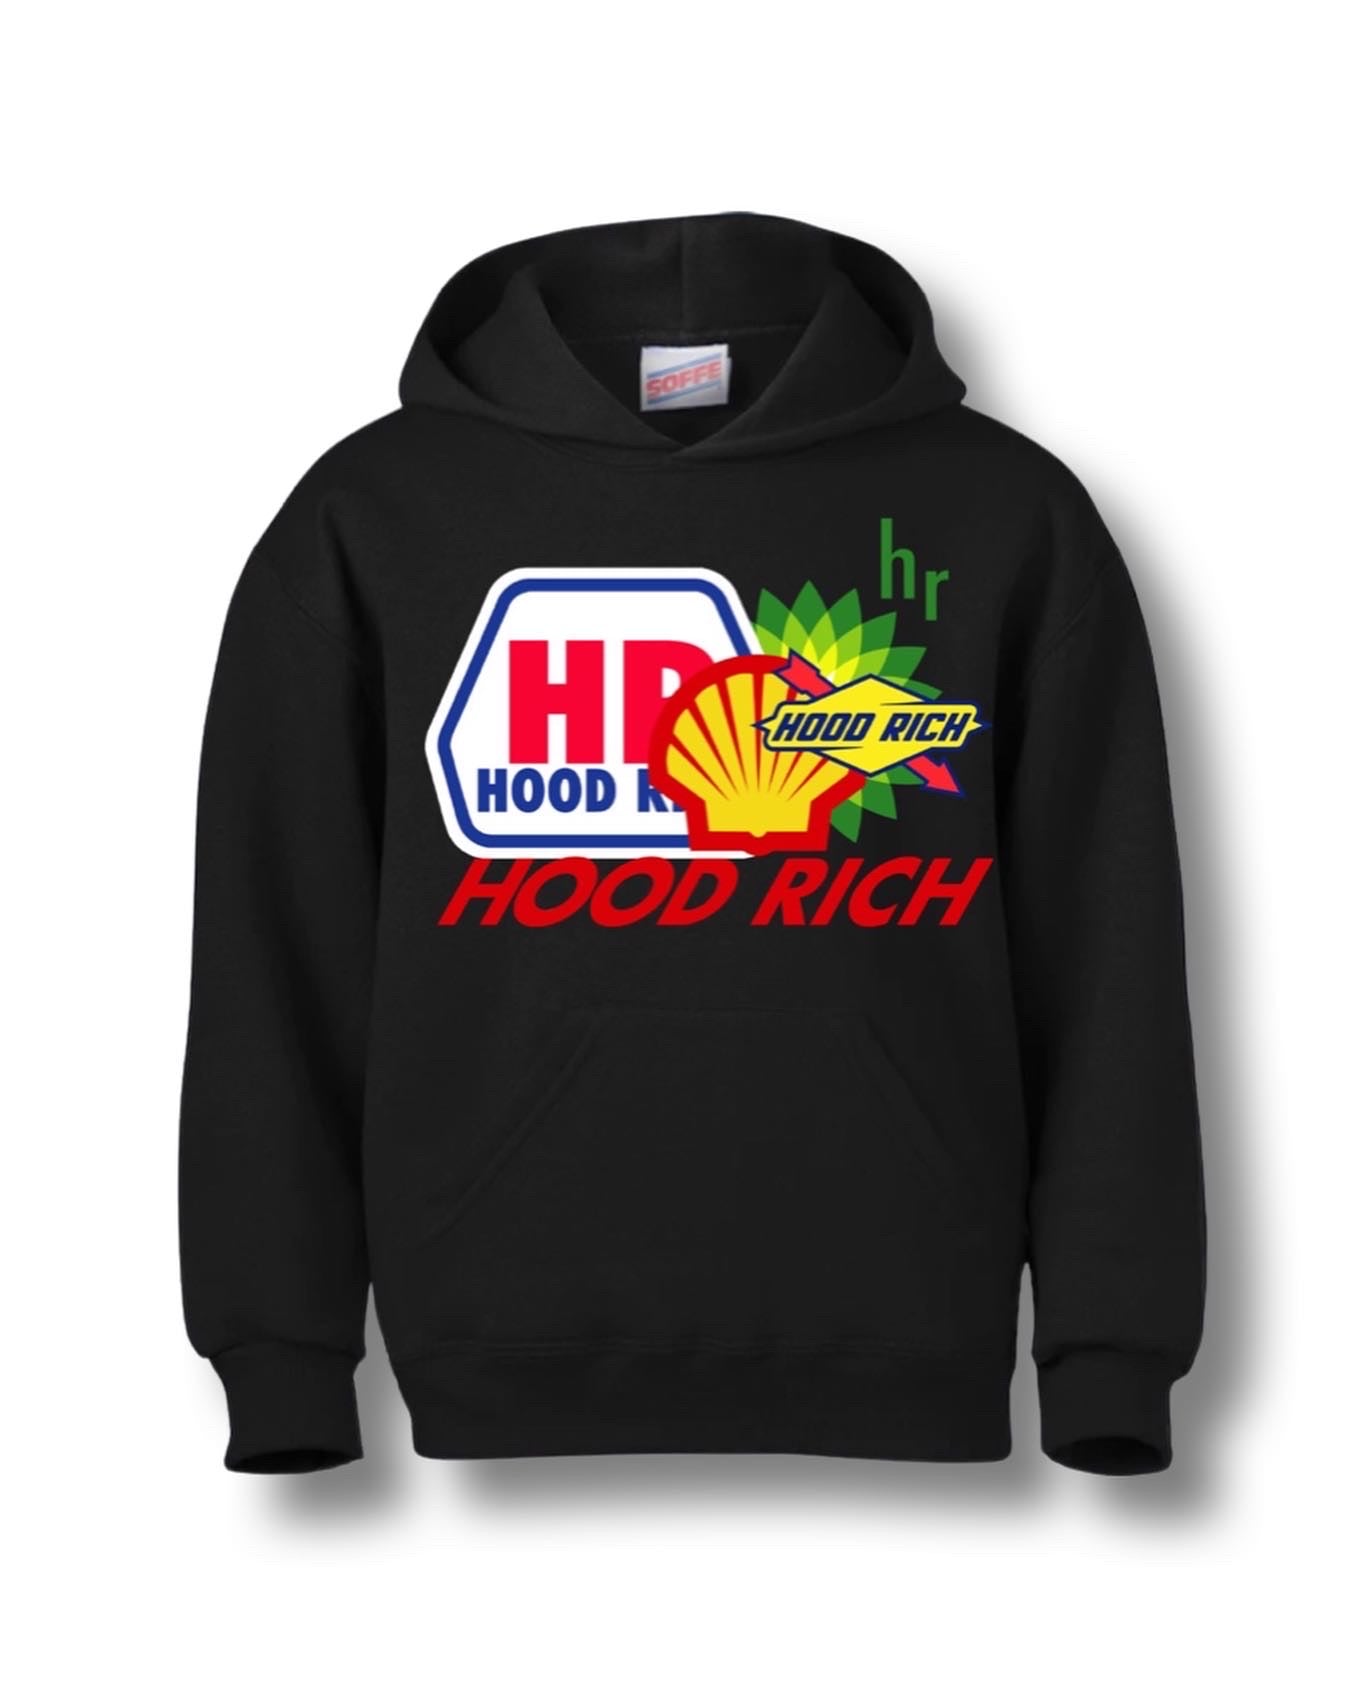 HR Gas Station Hoodies